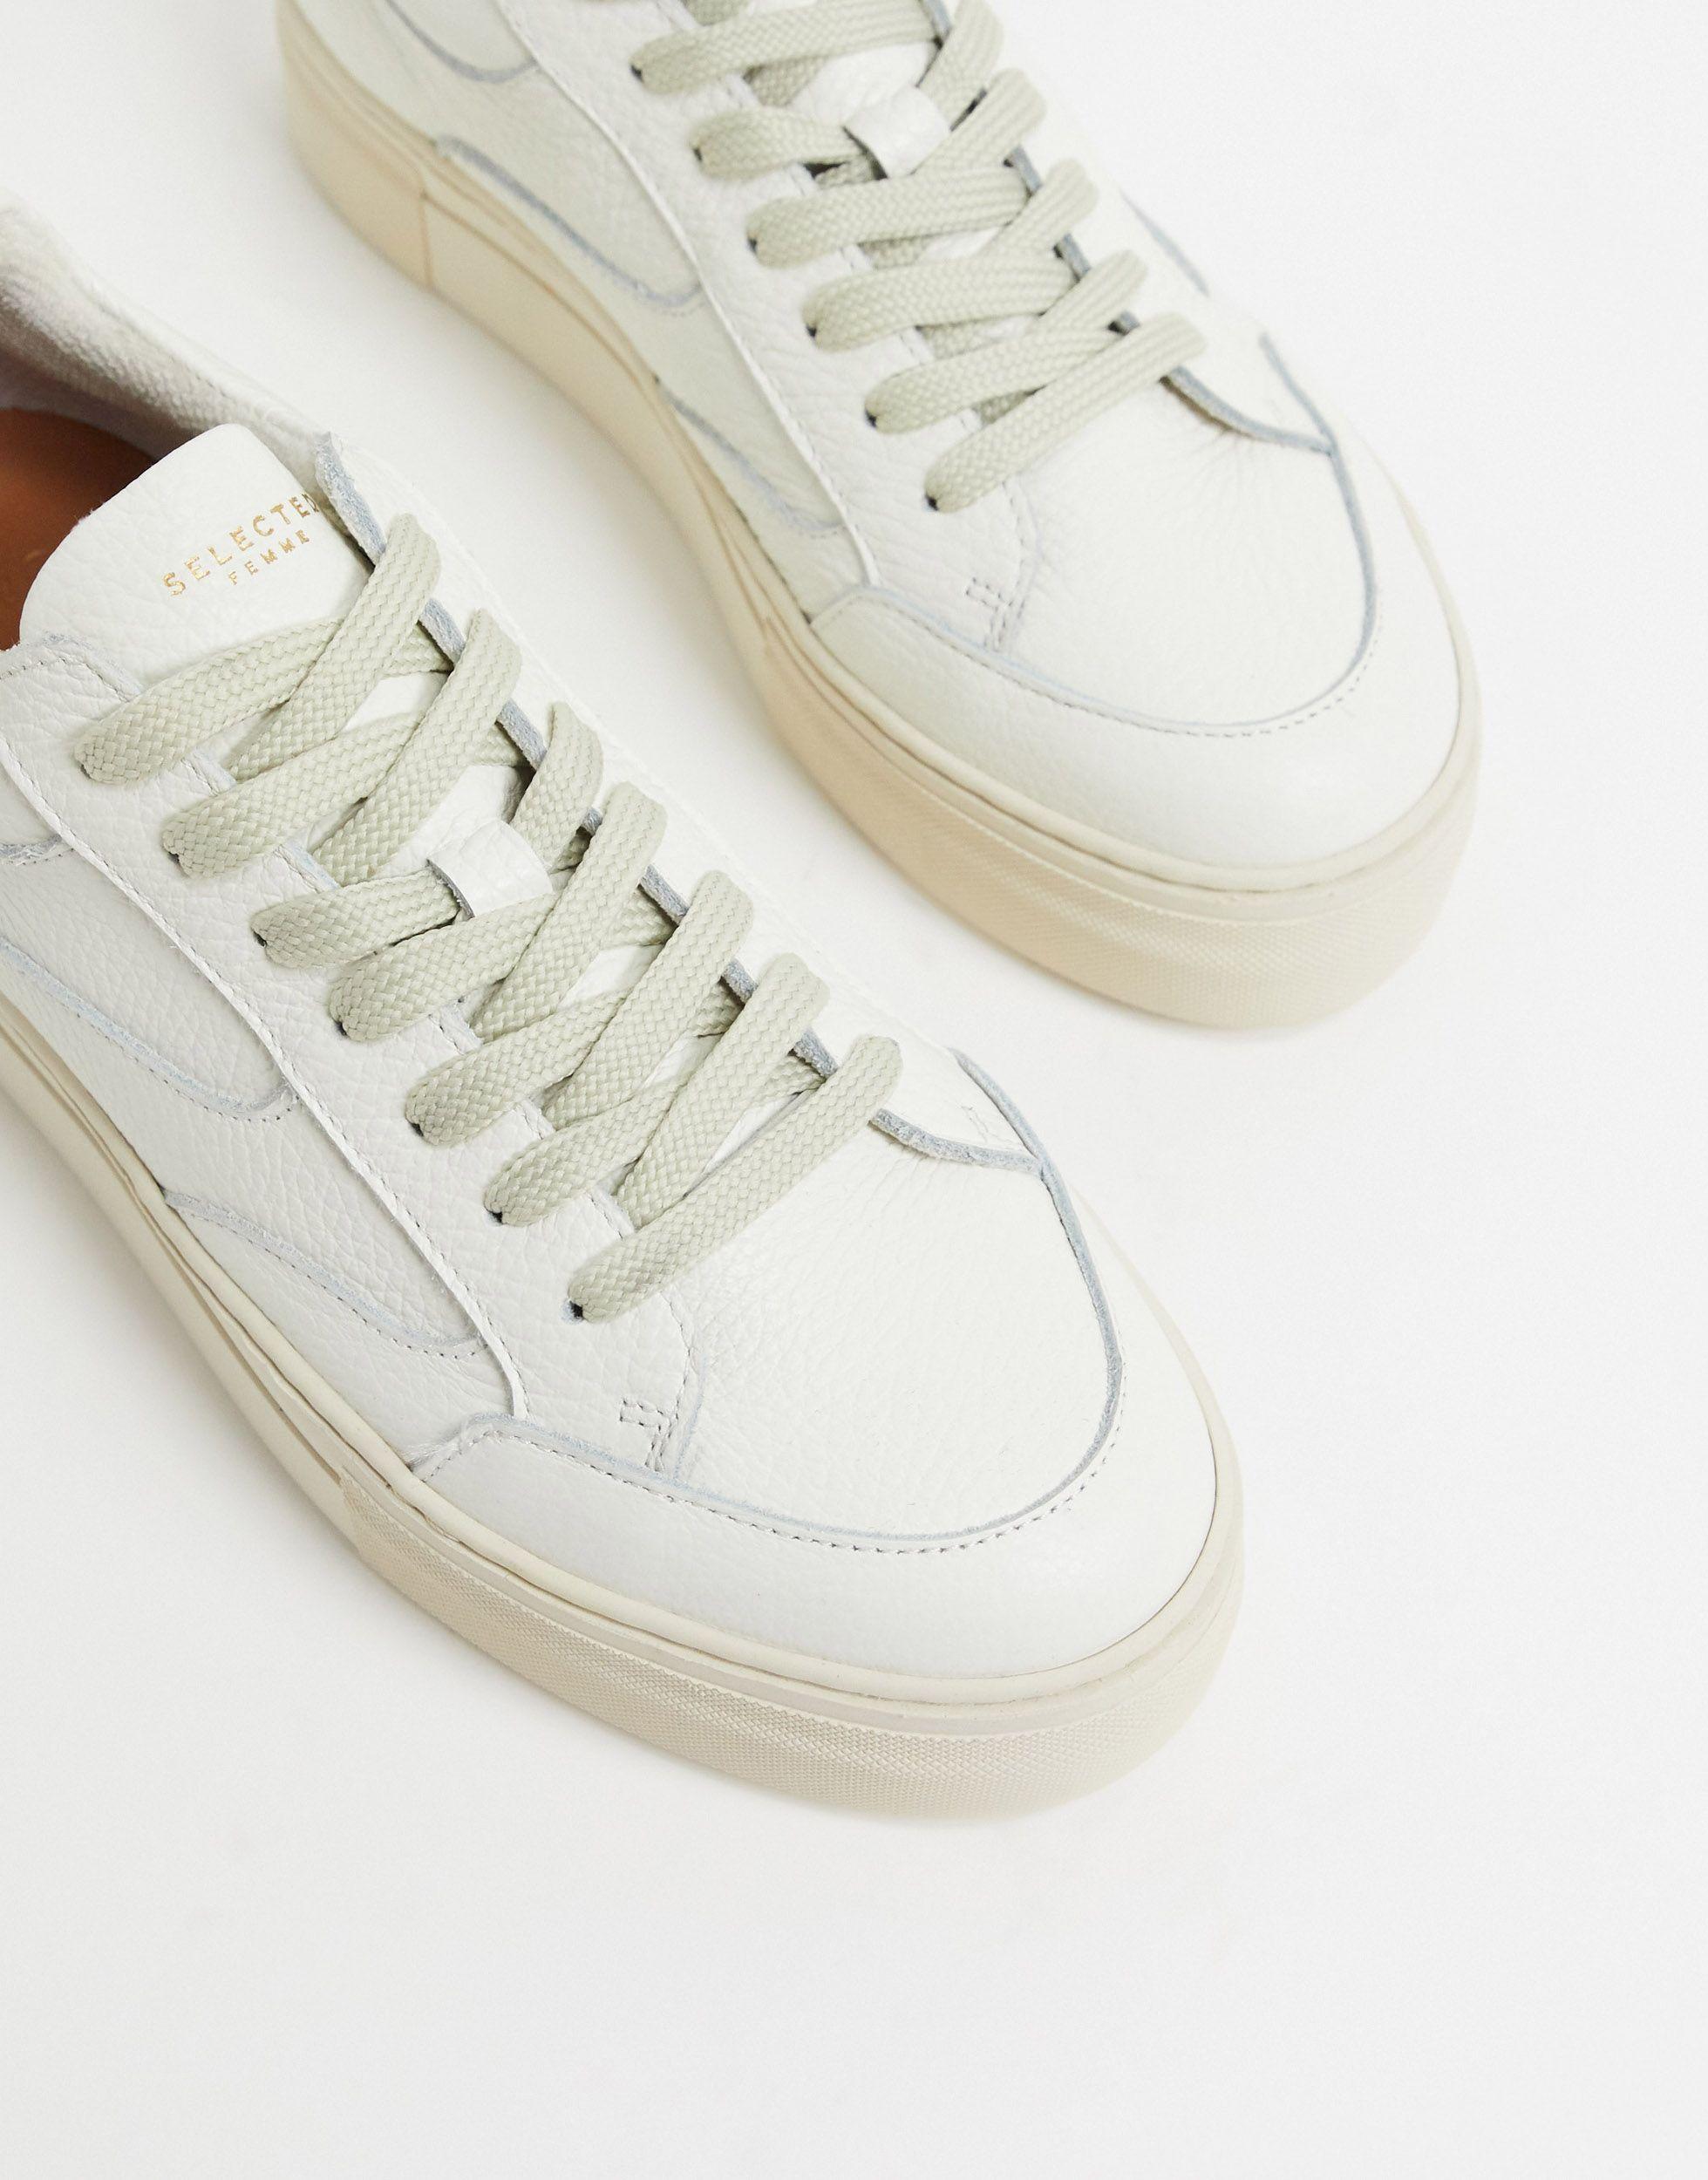 SELECTED Femme Platform Leather Sneaker in White | Lyst Australia